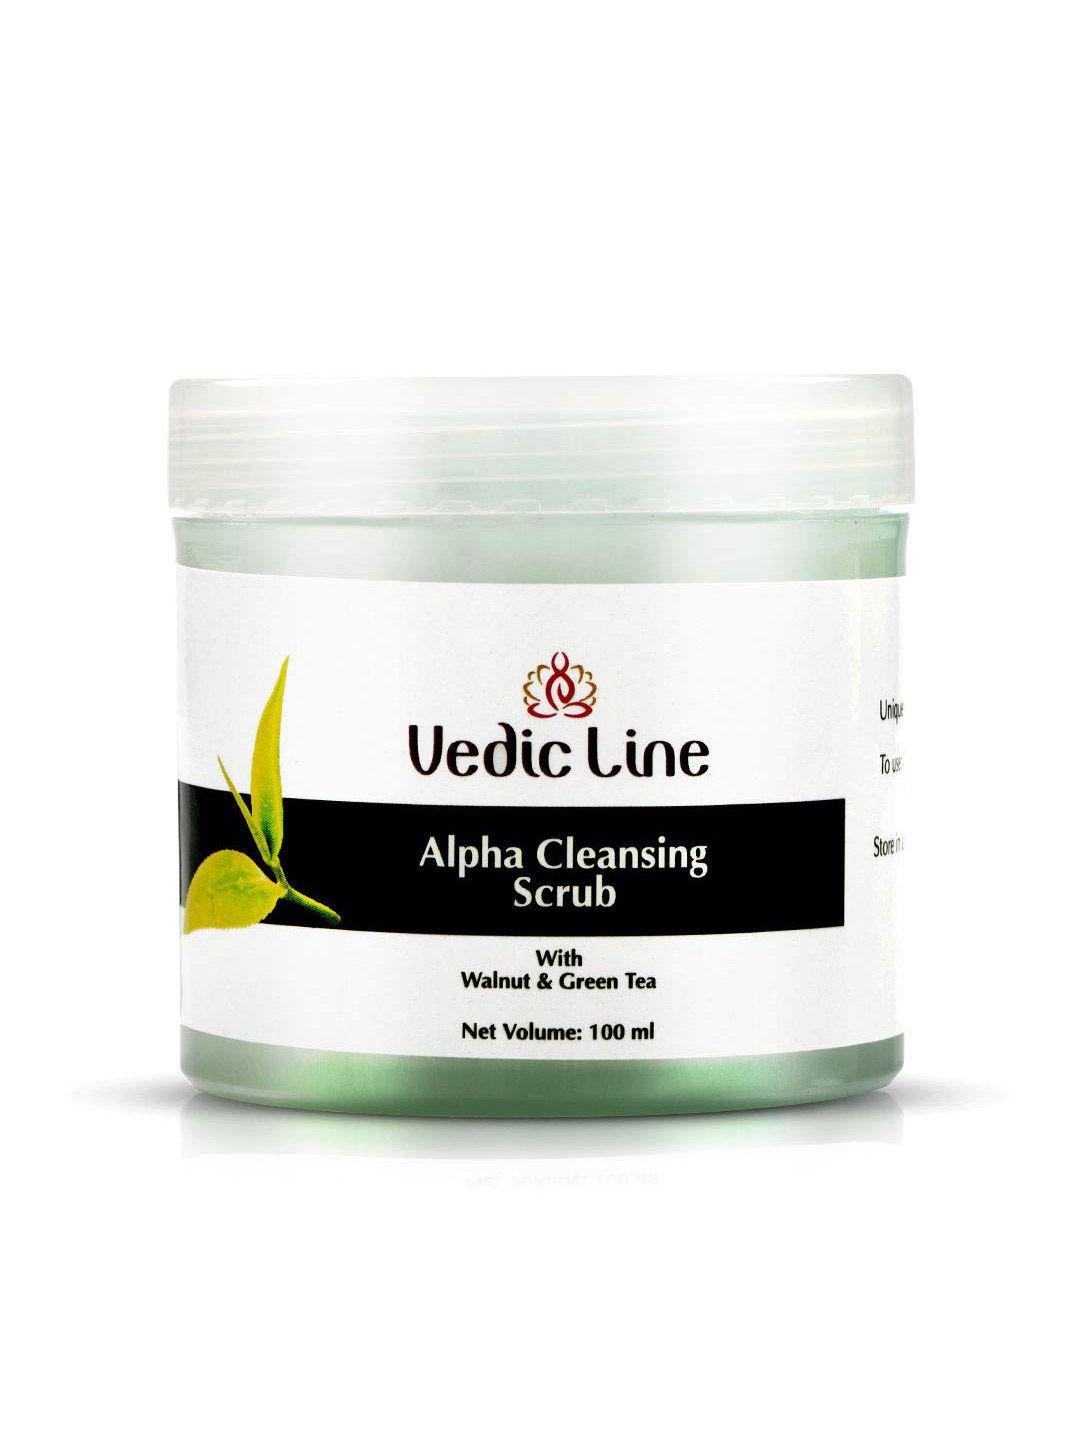 vedicline alpha cleansing face scrub with walnut & green tea - 100ml